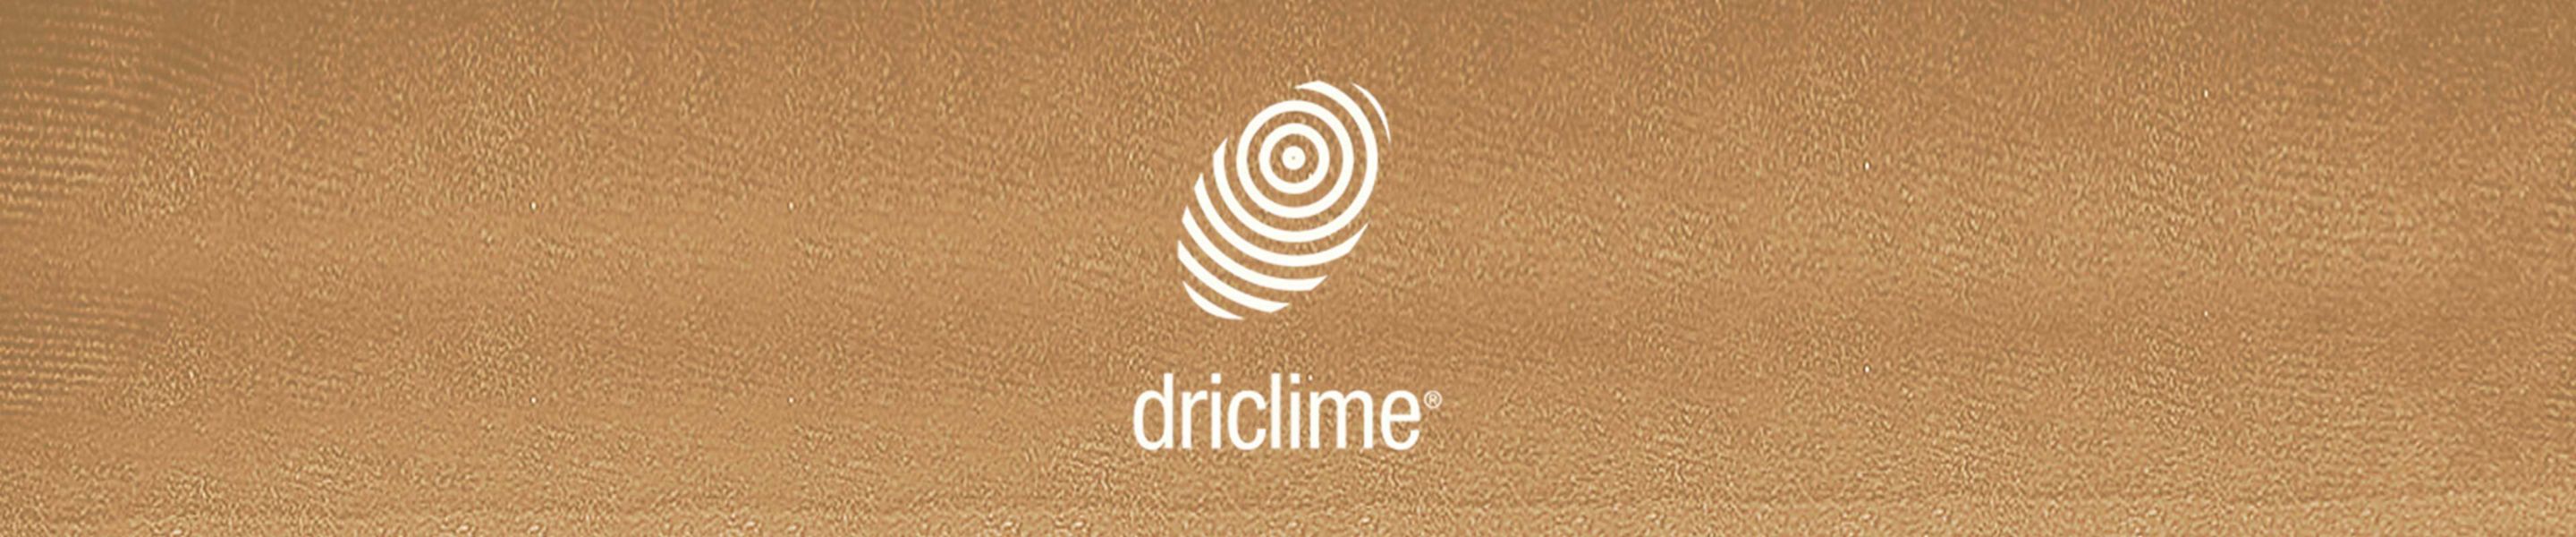 DriClime logo